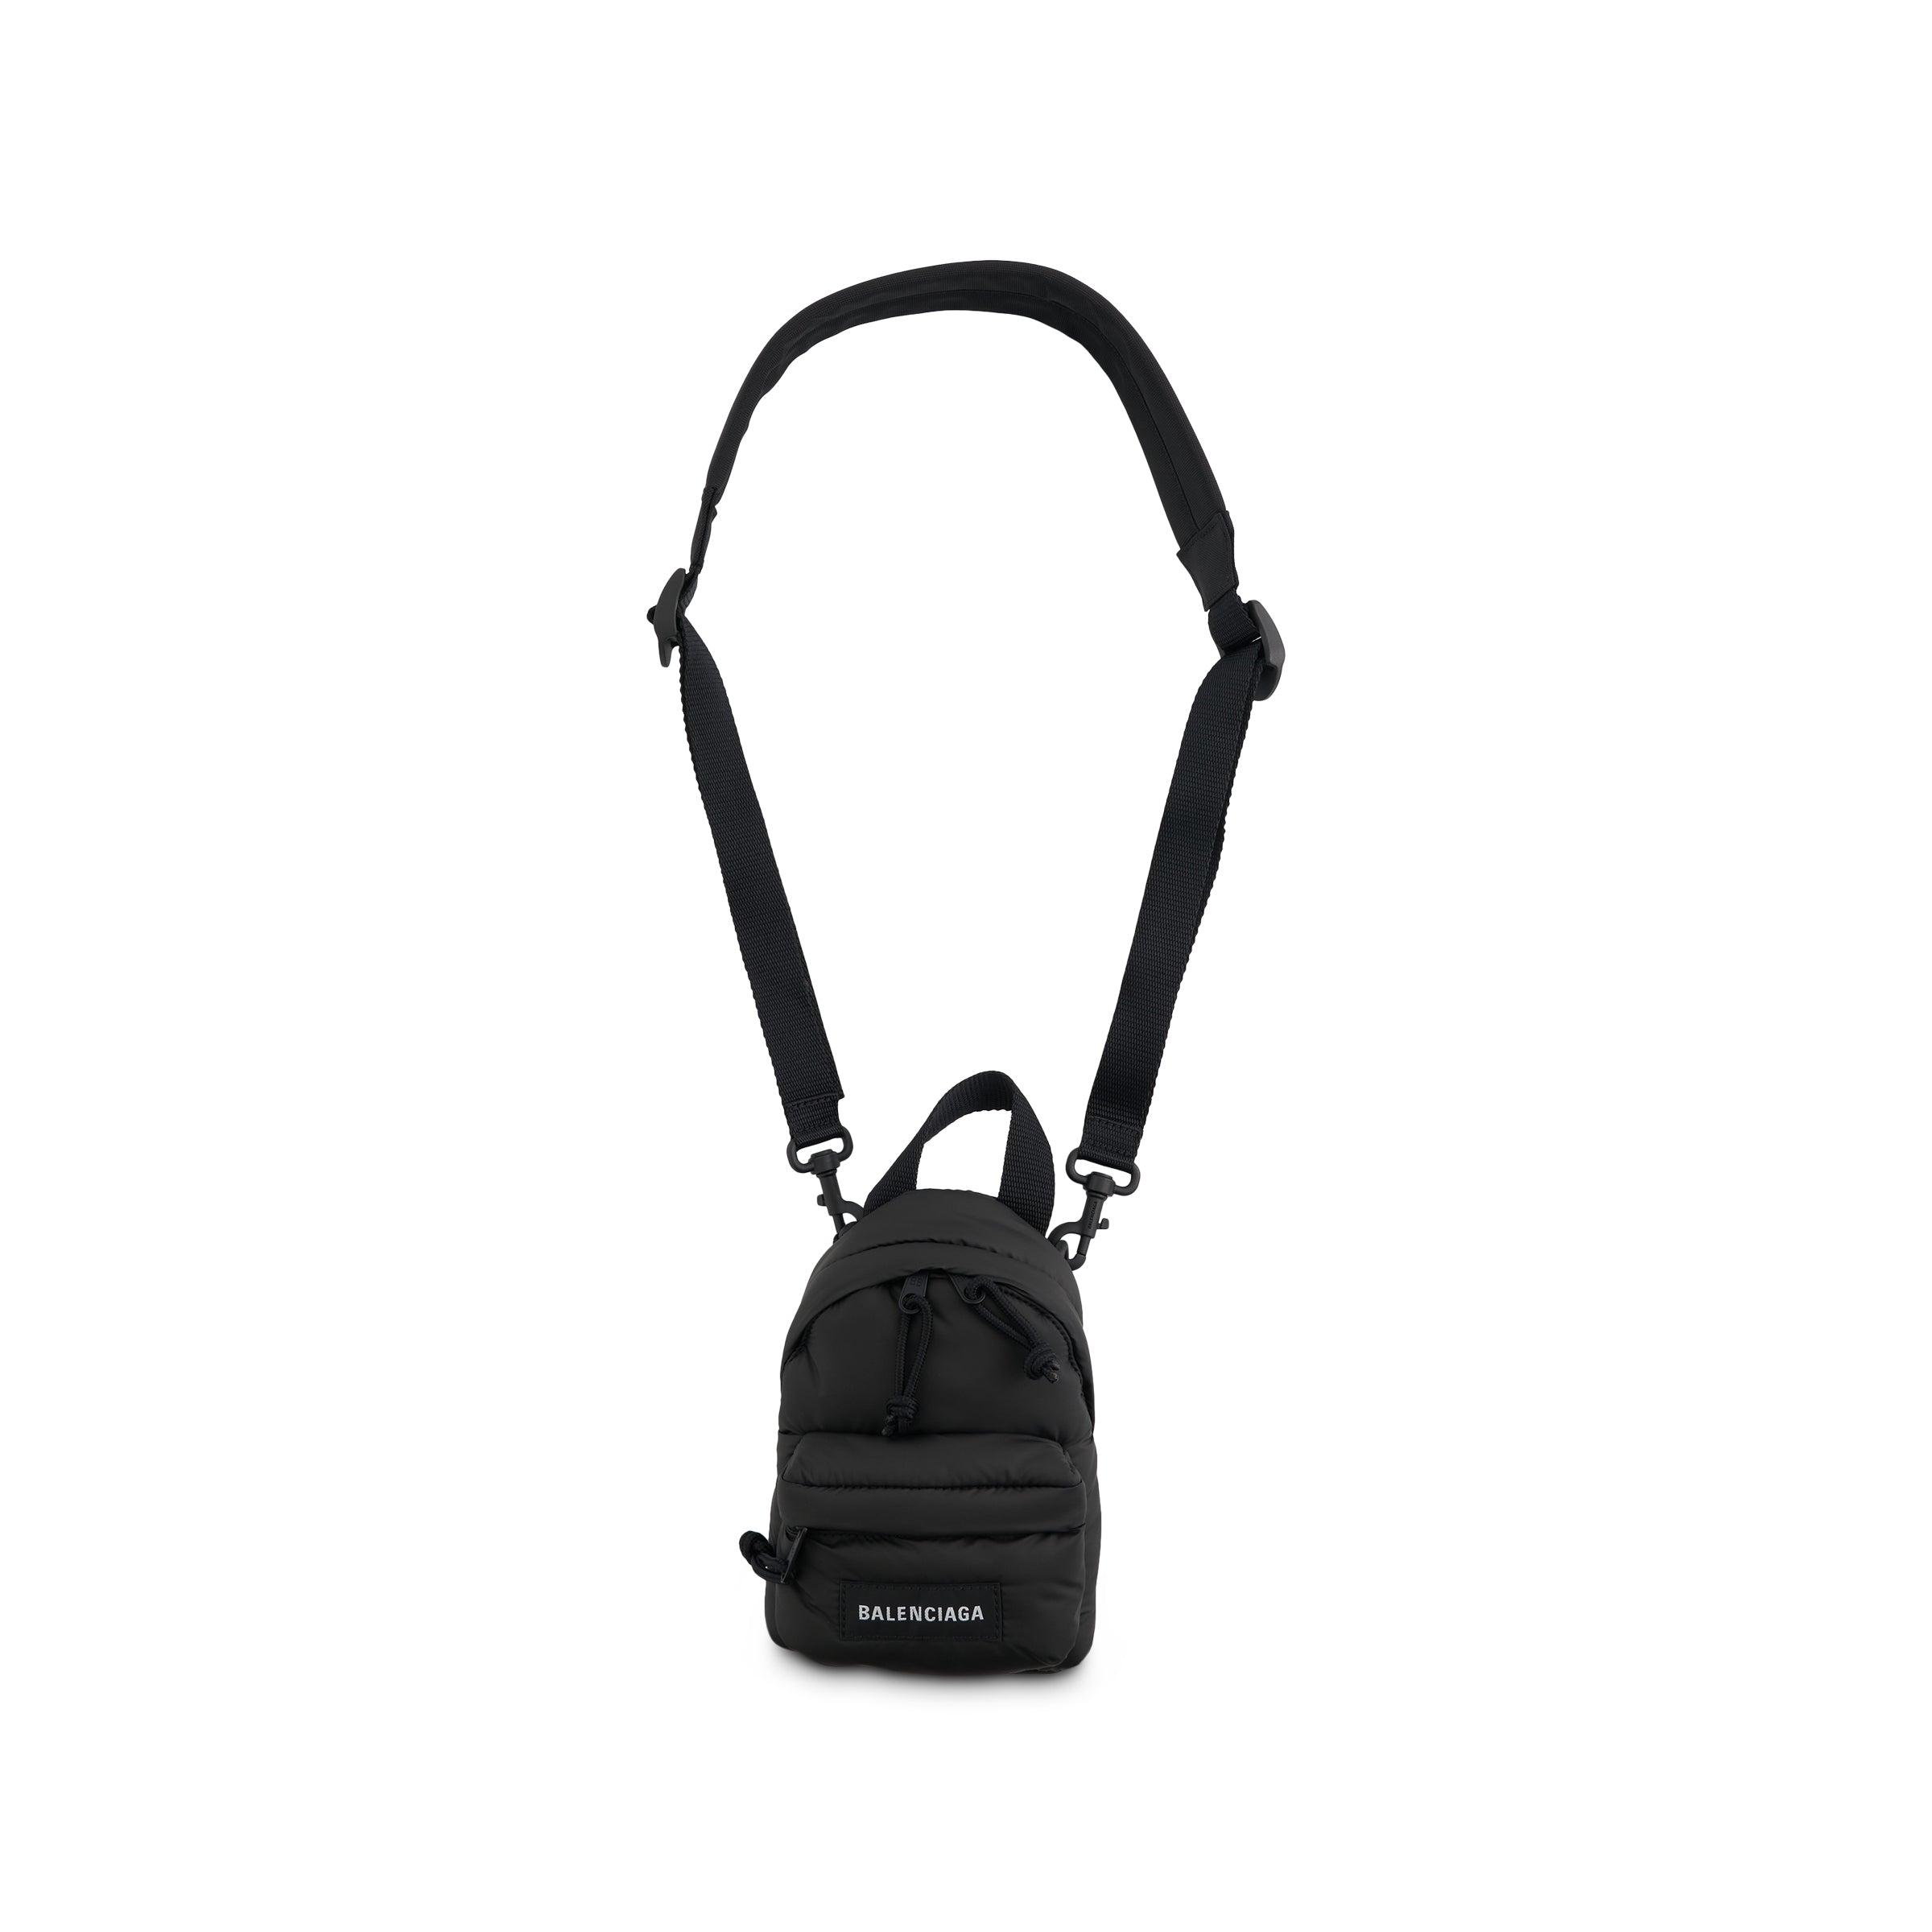 Balenciaga Explorer mini crossbody backpack for Men - Prints in